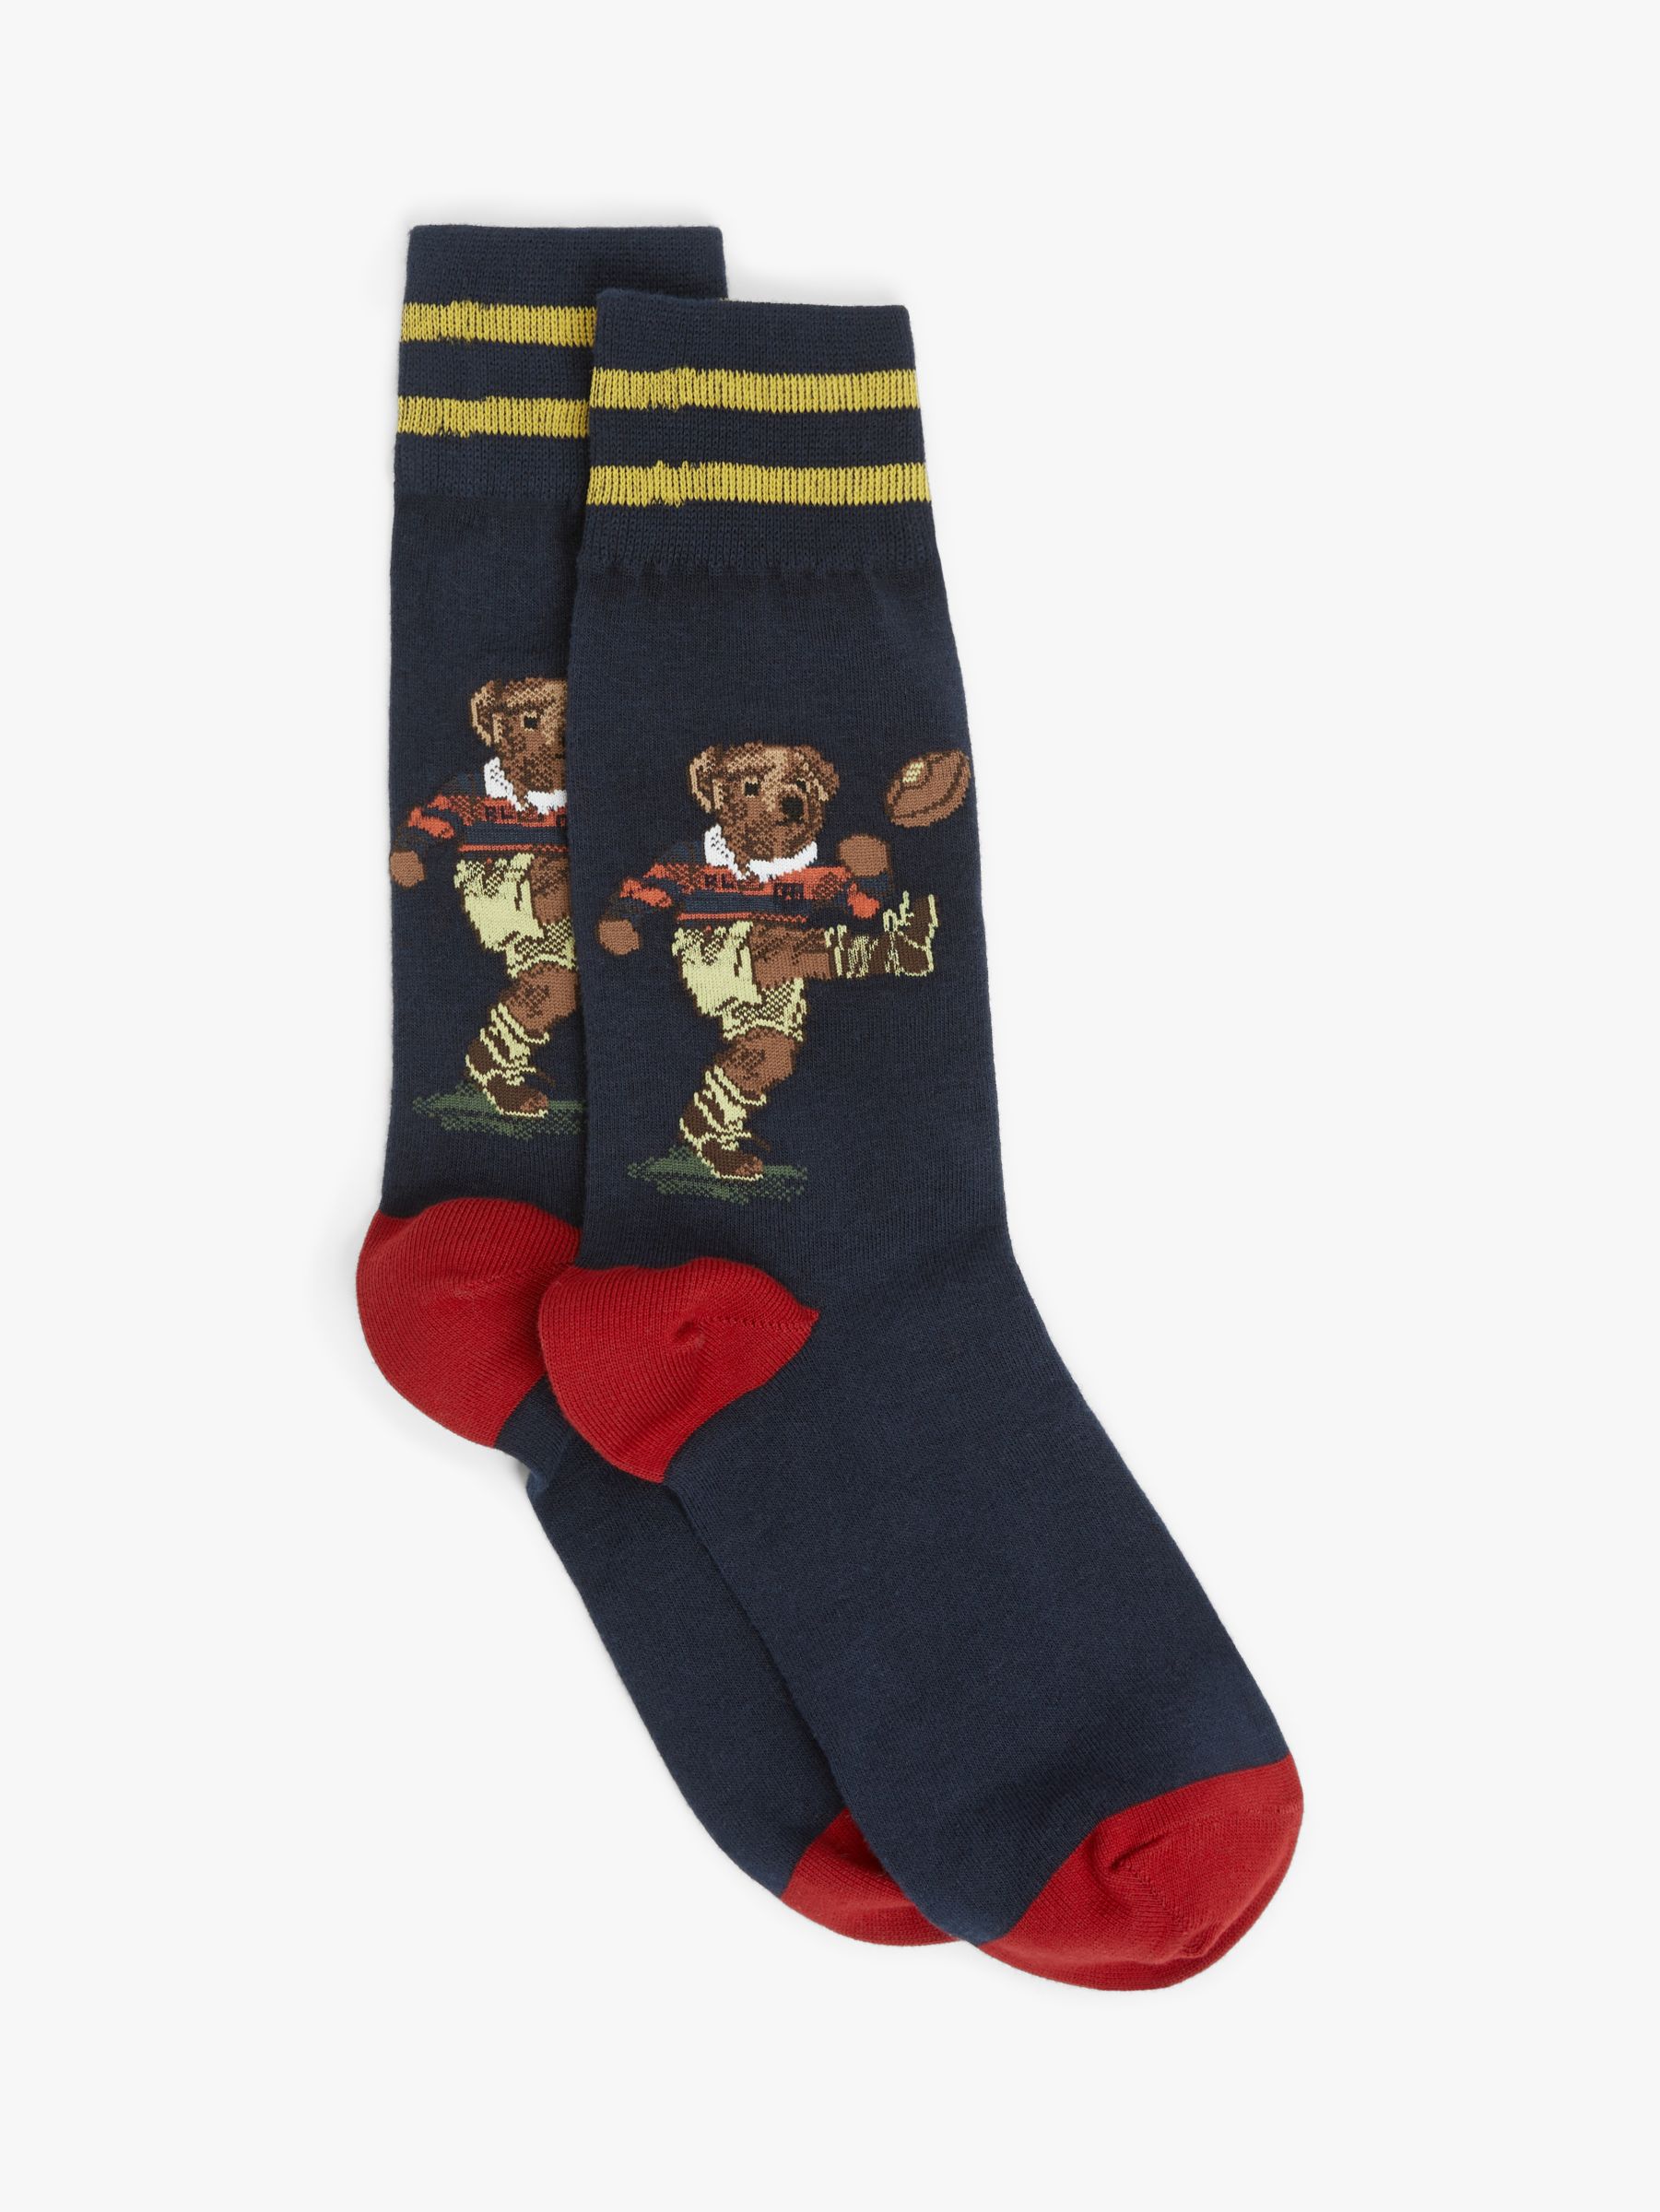 polo ralph lauren teddy bear socks